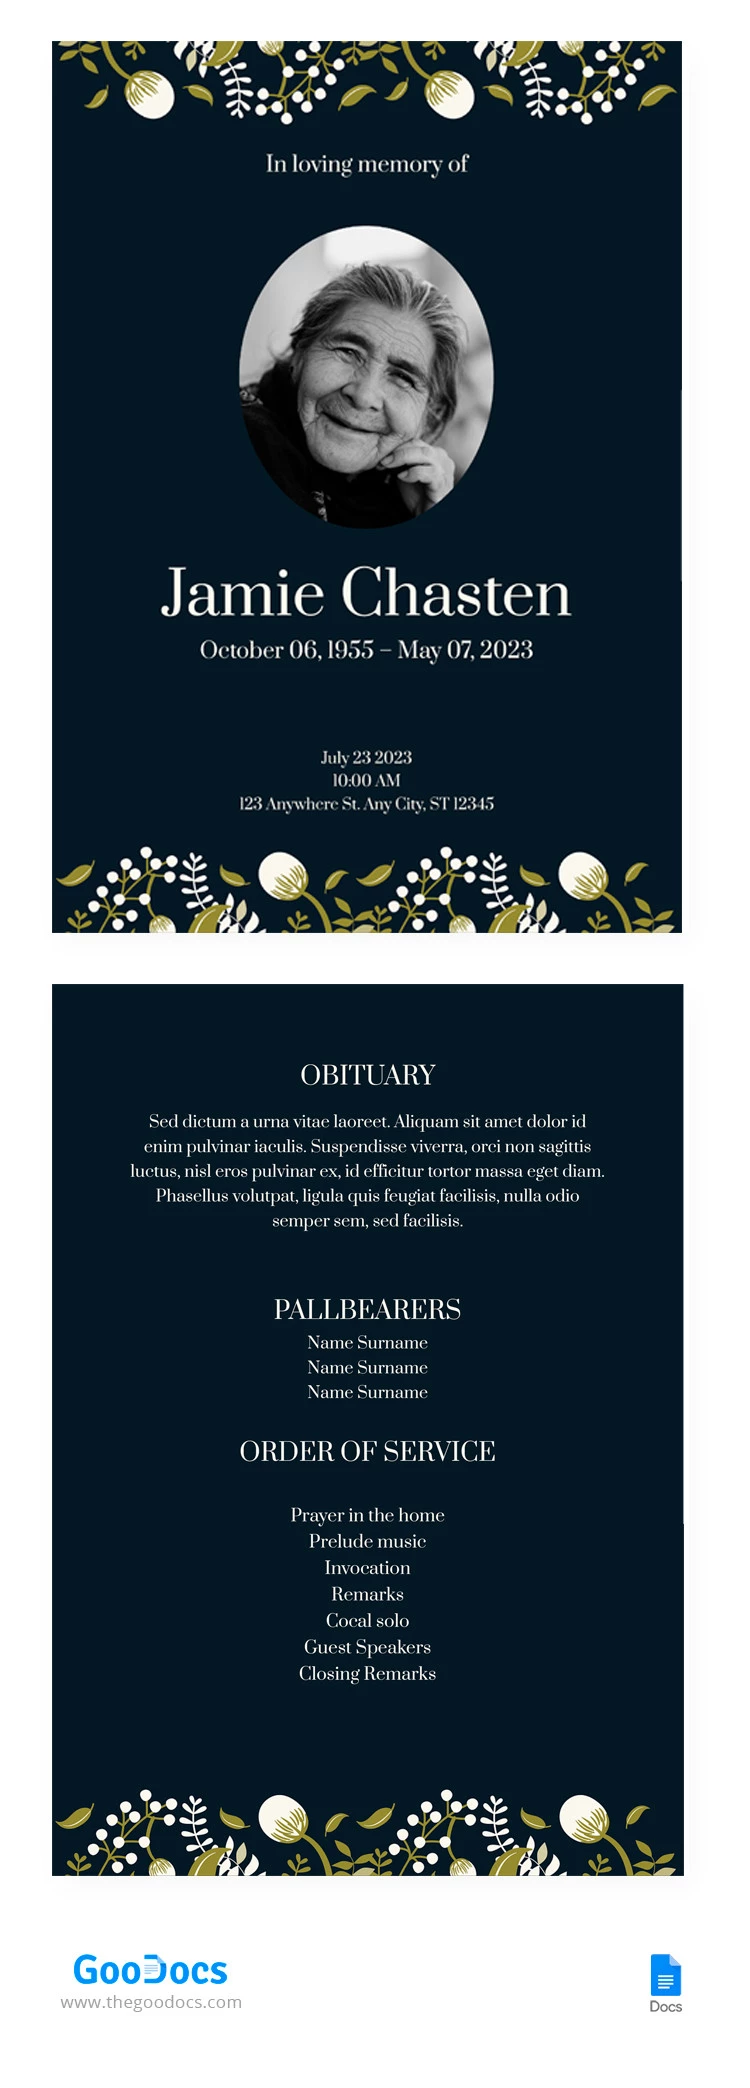 Programa de Funeral de la Flor Blanca - free Google Docs Template - 10065382